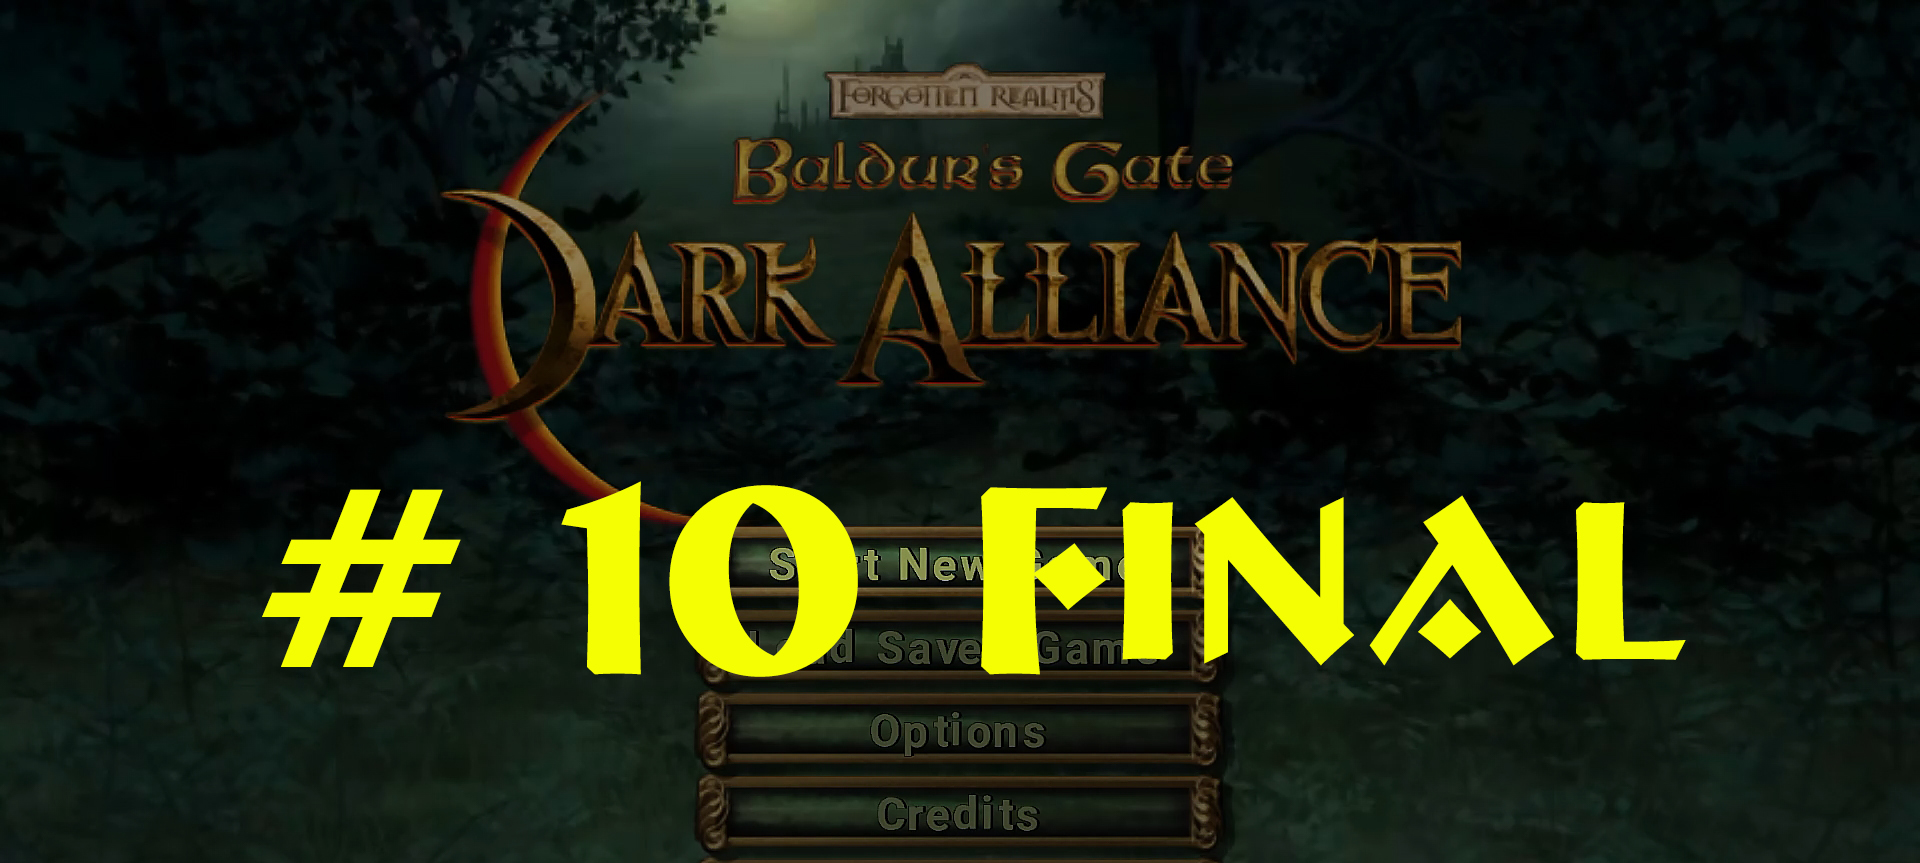 Baldur gates dark alliance прохождение фото 14